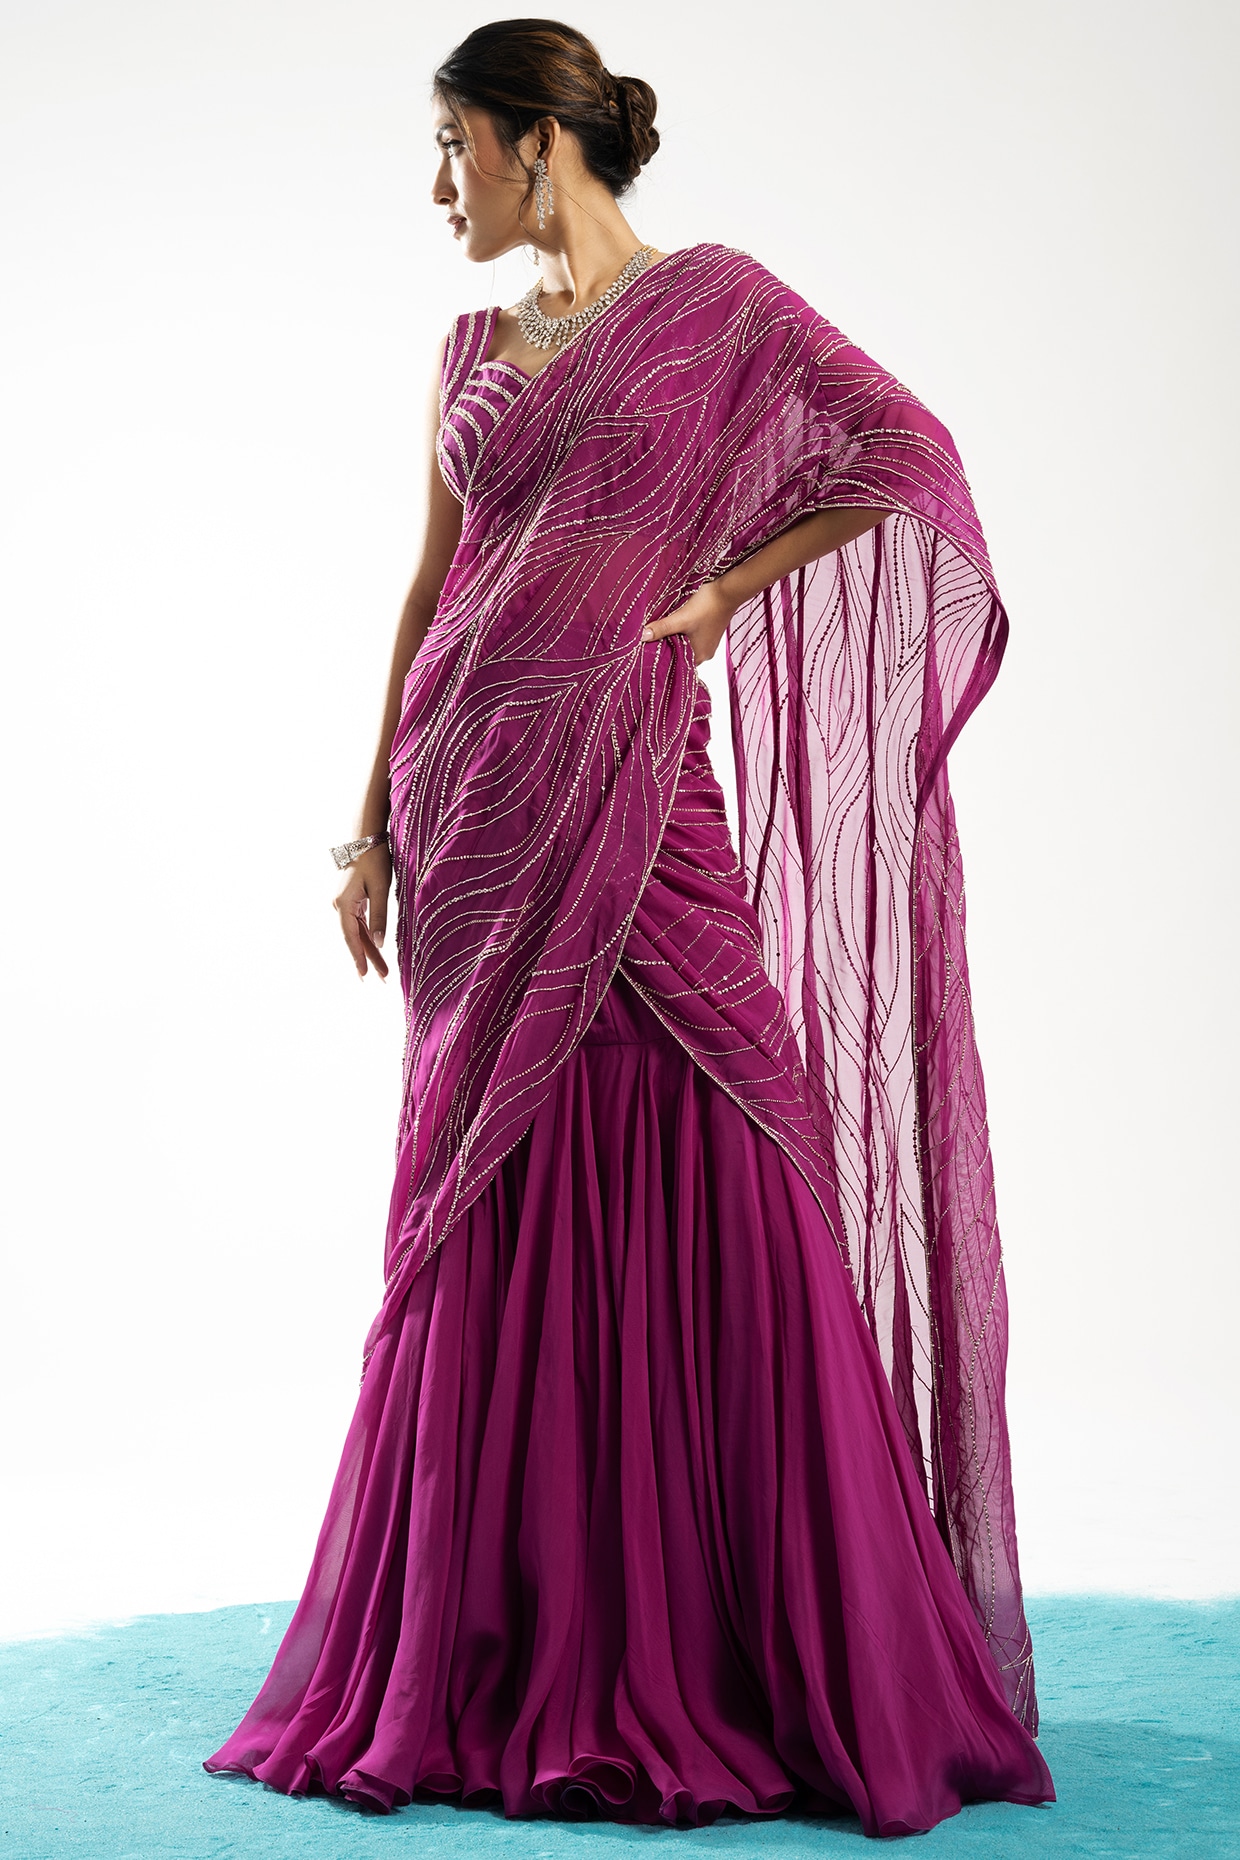 Beautiful Lehenga Saree in Pink & Aqua Blue Color with Embroidery Design |  Lehenga style saree, Saree designs, Lehenga style